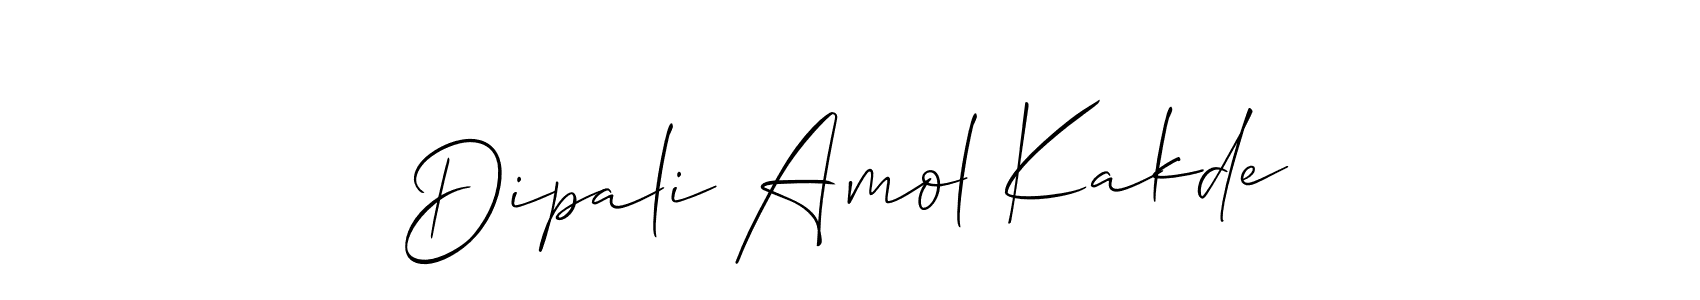 96+ Dipali Amol Kakde Name Signature Style Ideas | Cool Electronic Sign